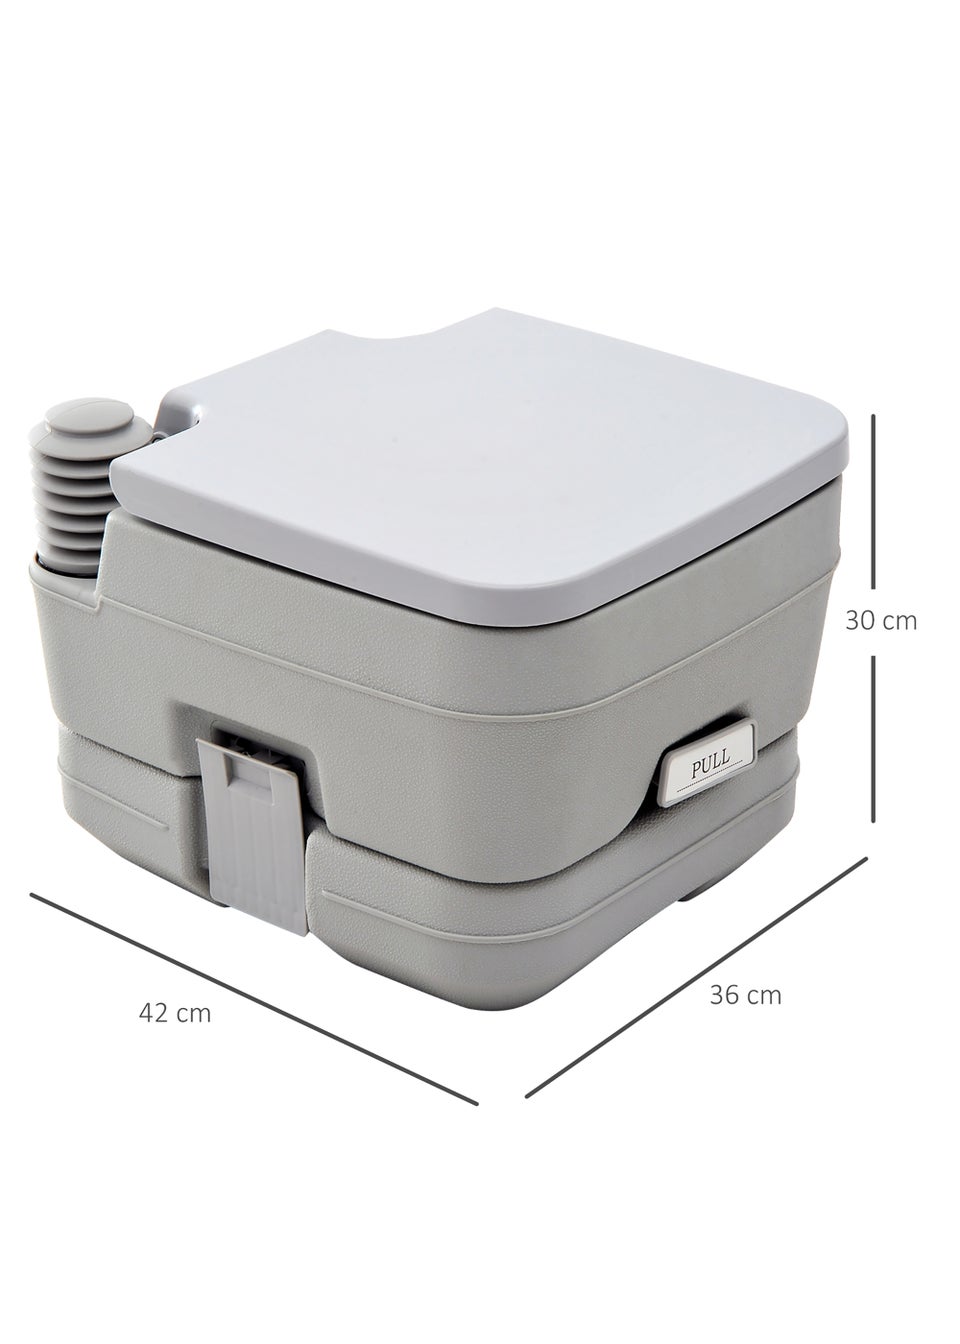 HOMCOM Portable Travel Toilet (10L)